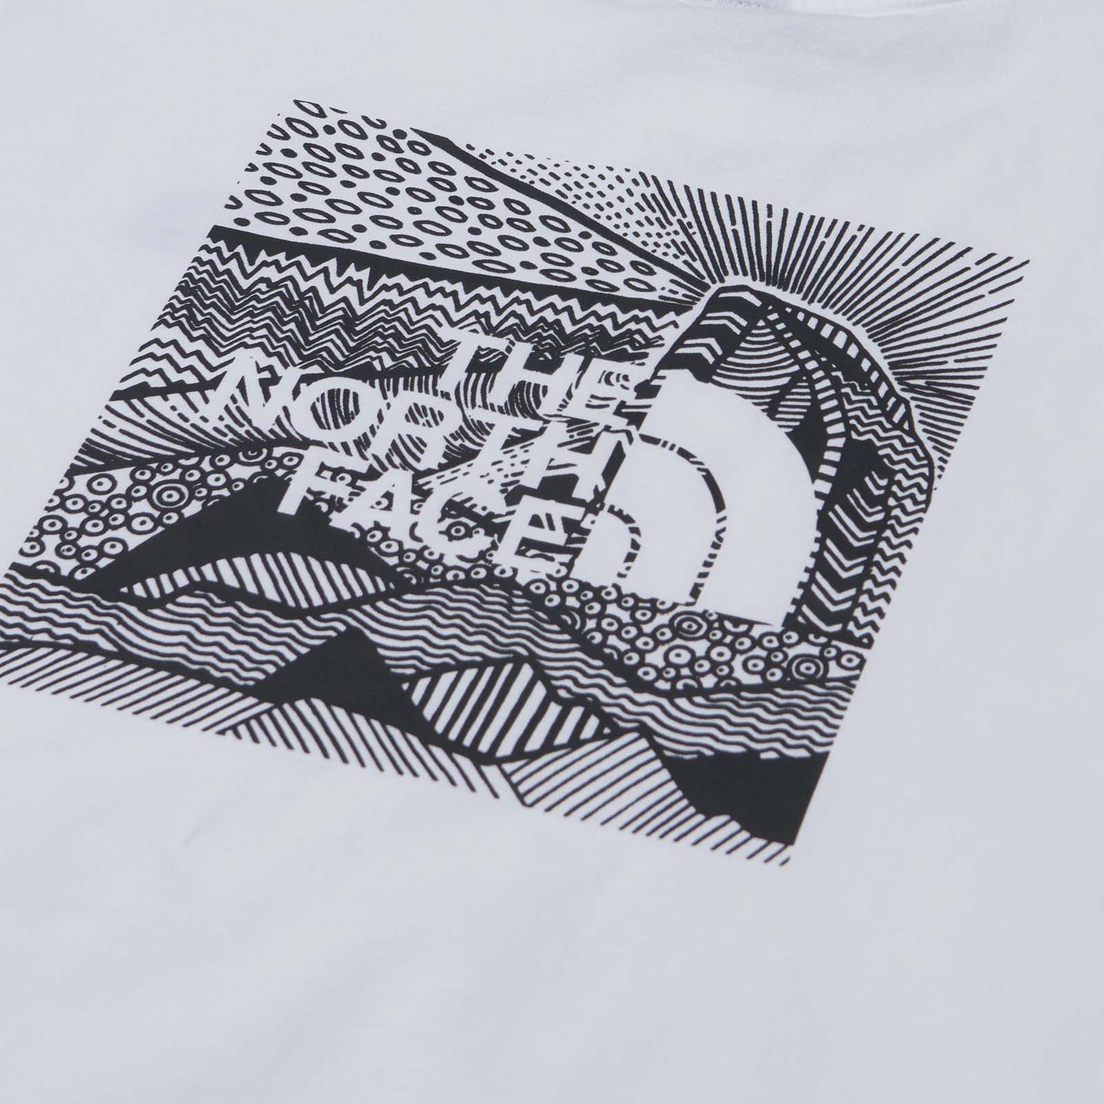 The North Face Мужская футболка Redbox Celebration